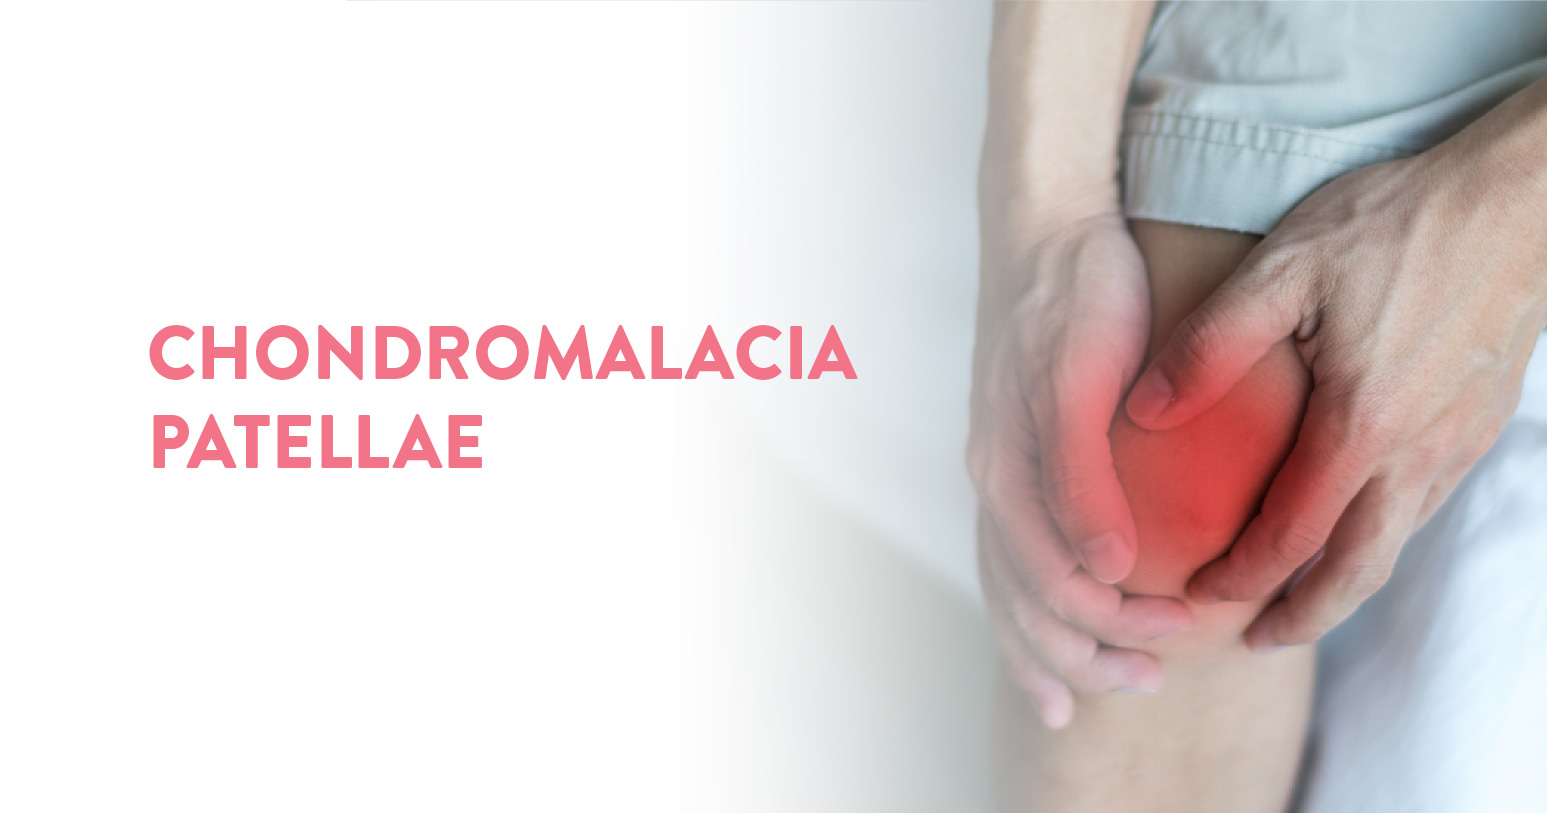 Chondromalacia Patellae treatment